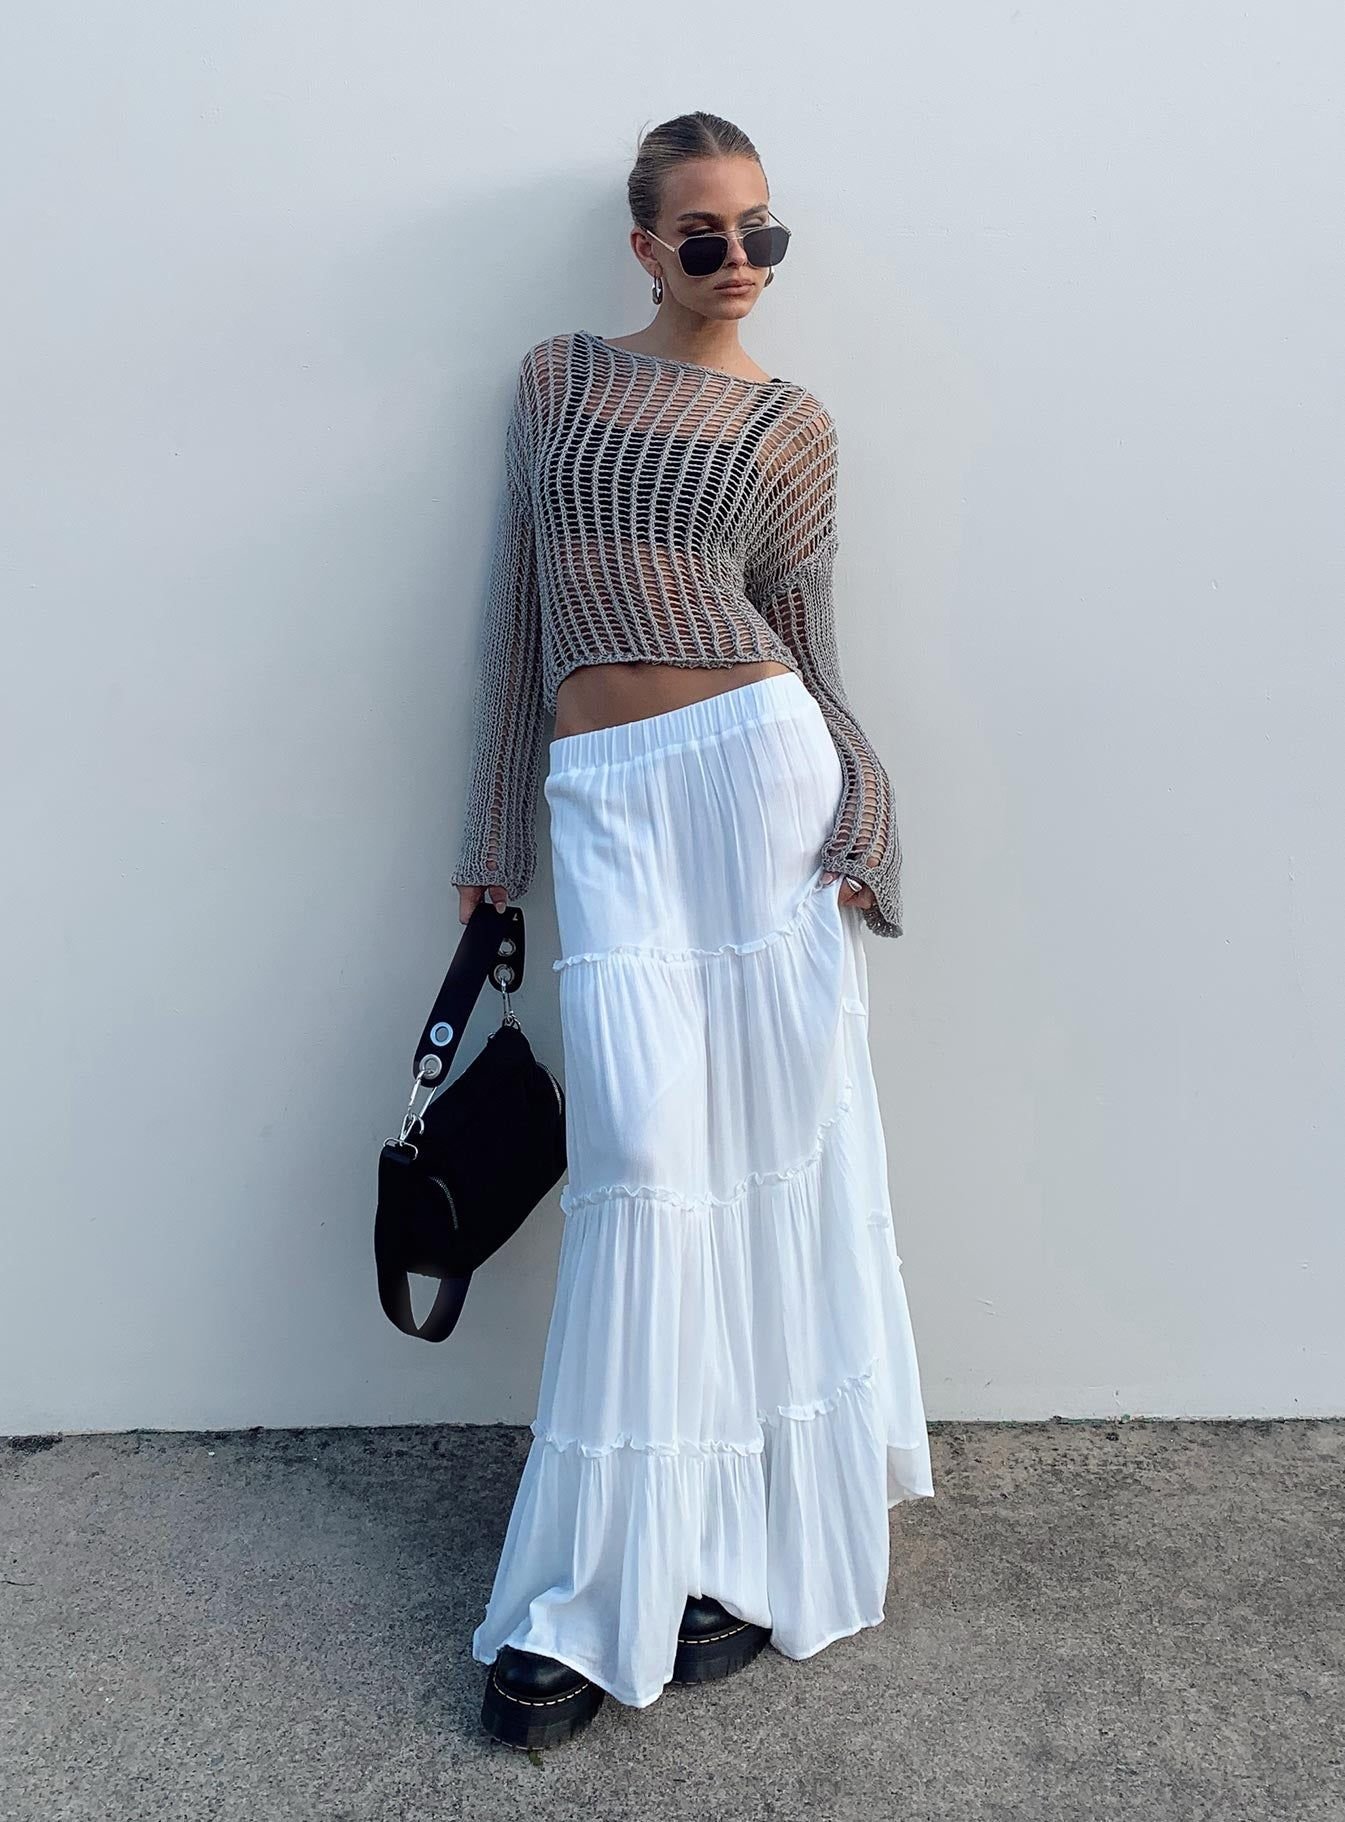 Boho Chic Style in a Maxi Skirt | Sydne Style